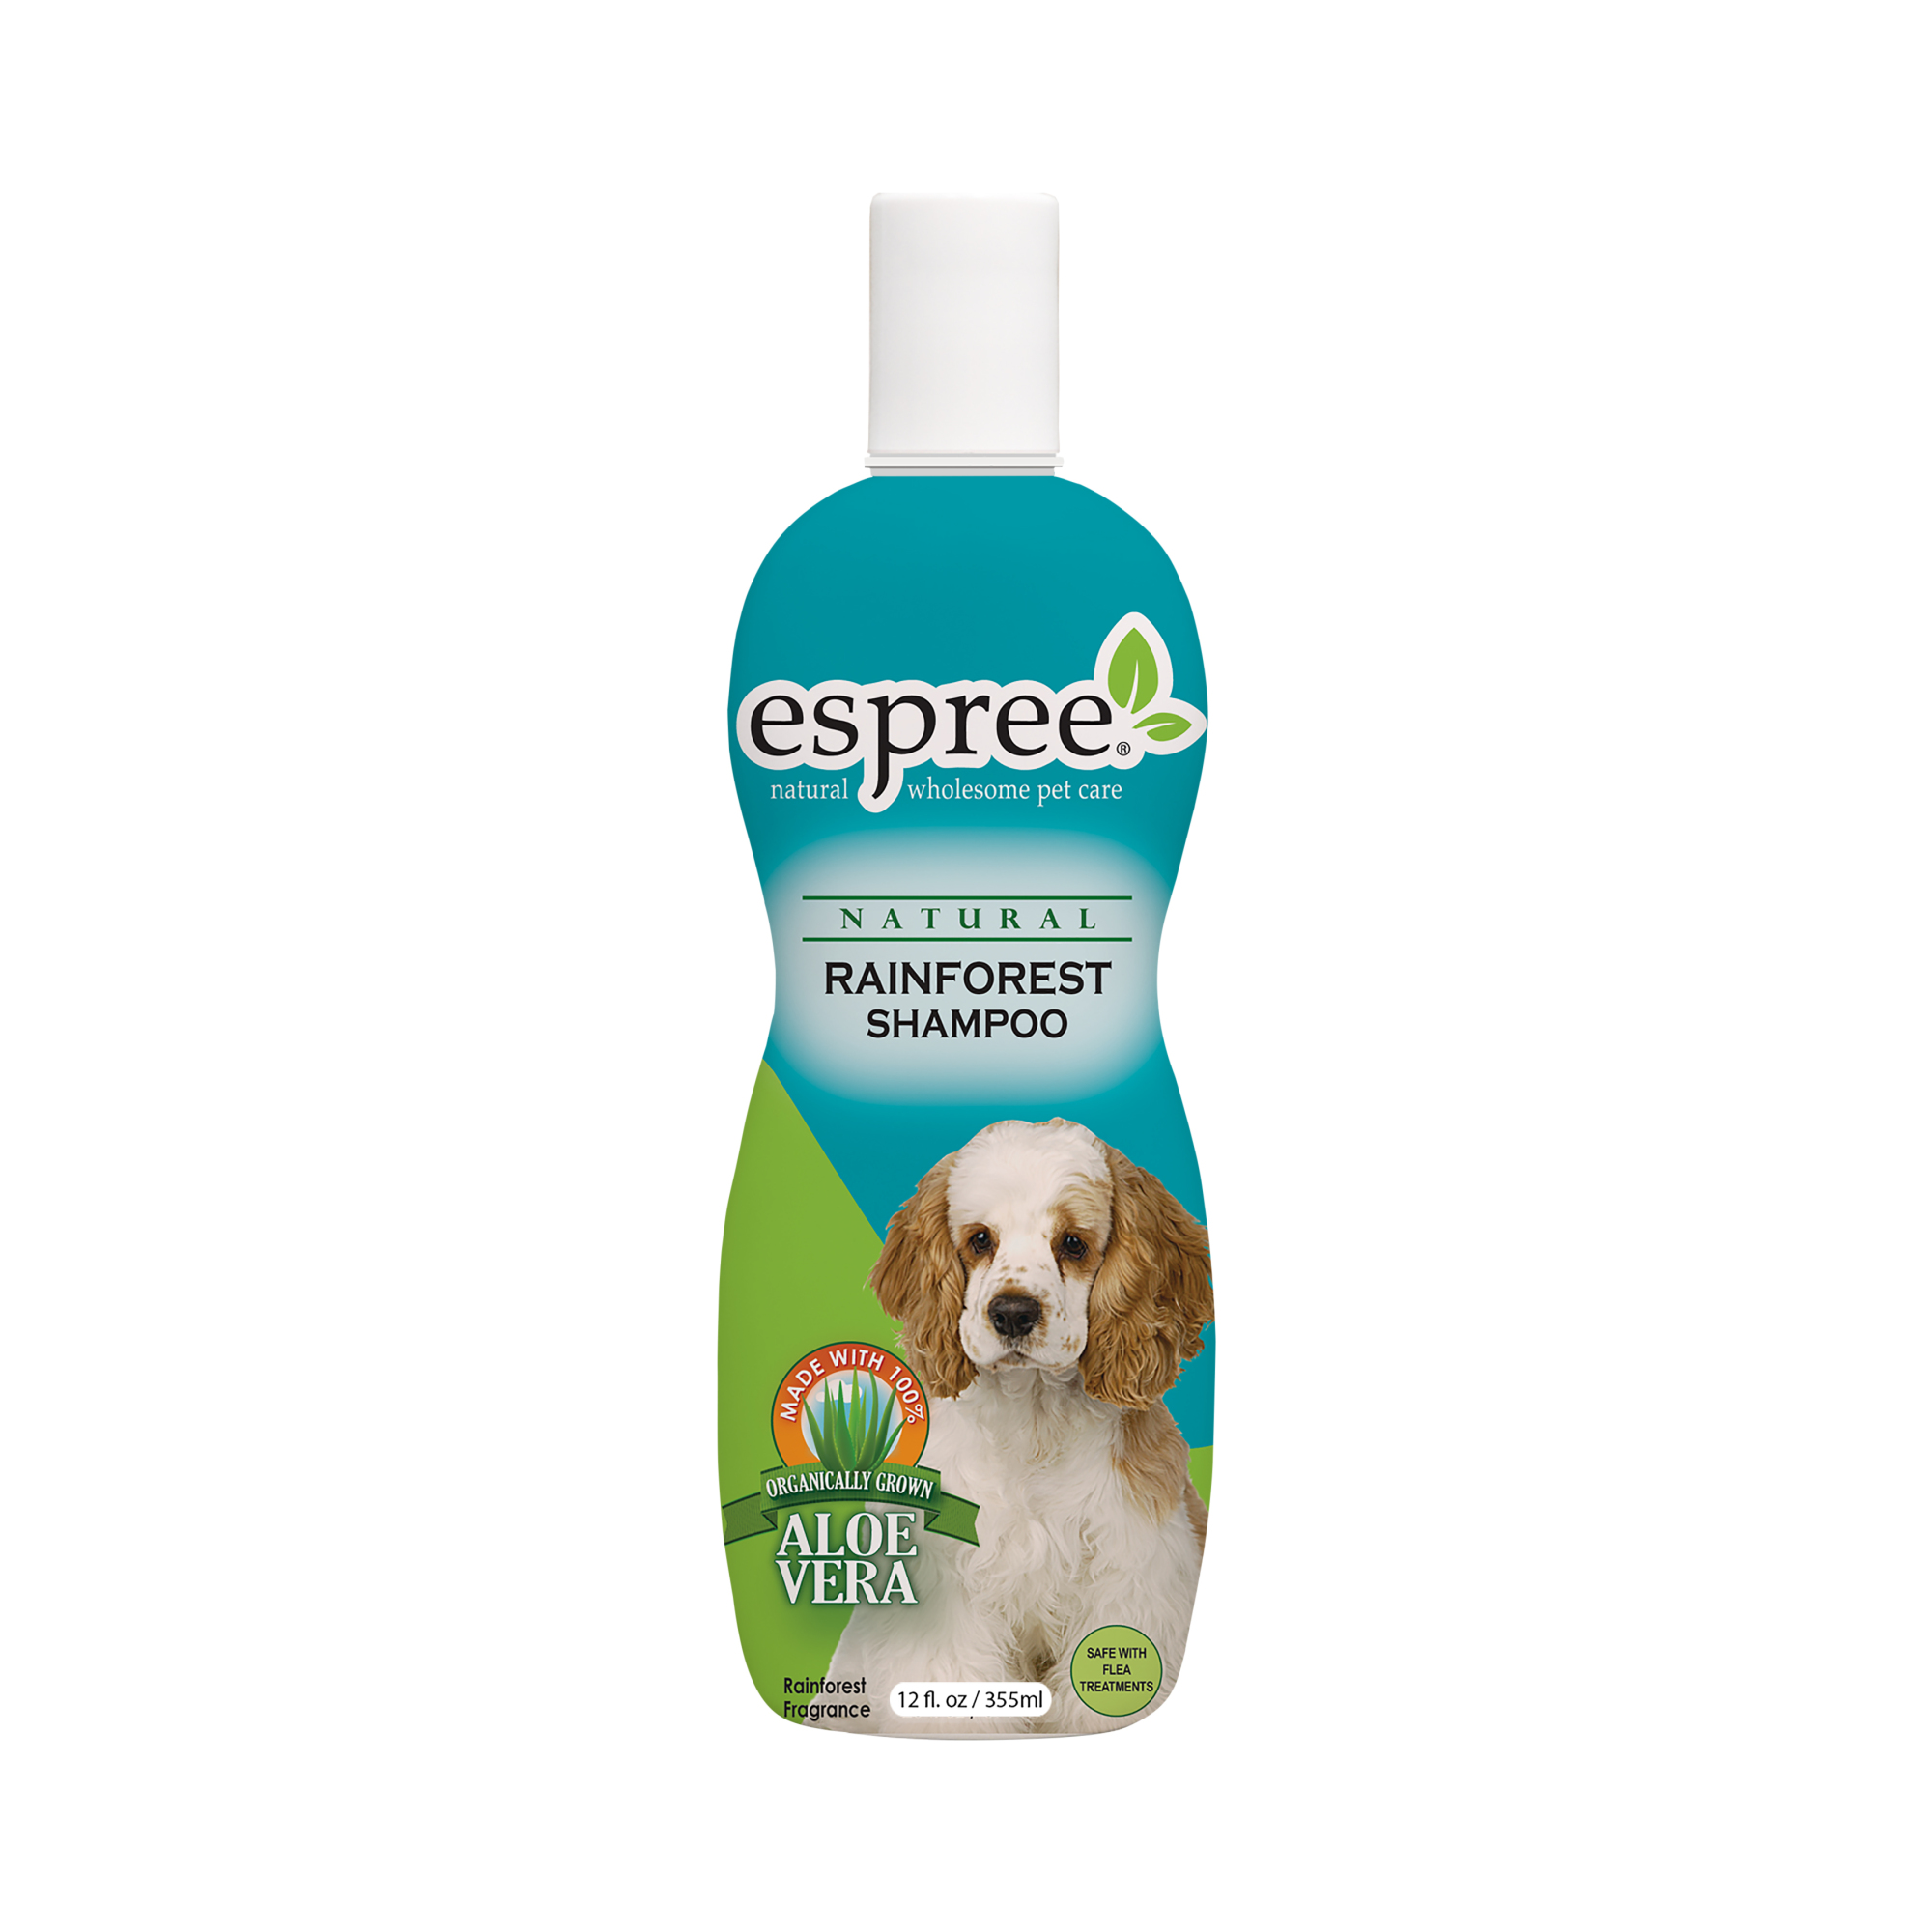 pave rustfri Arrangement Køb Espree Rainforest Shampoo til din hund | Tinybuddy